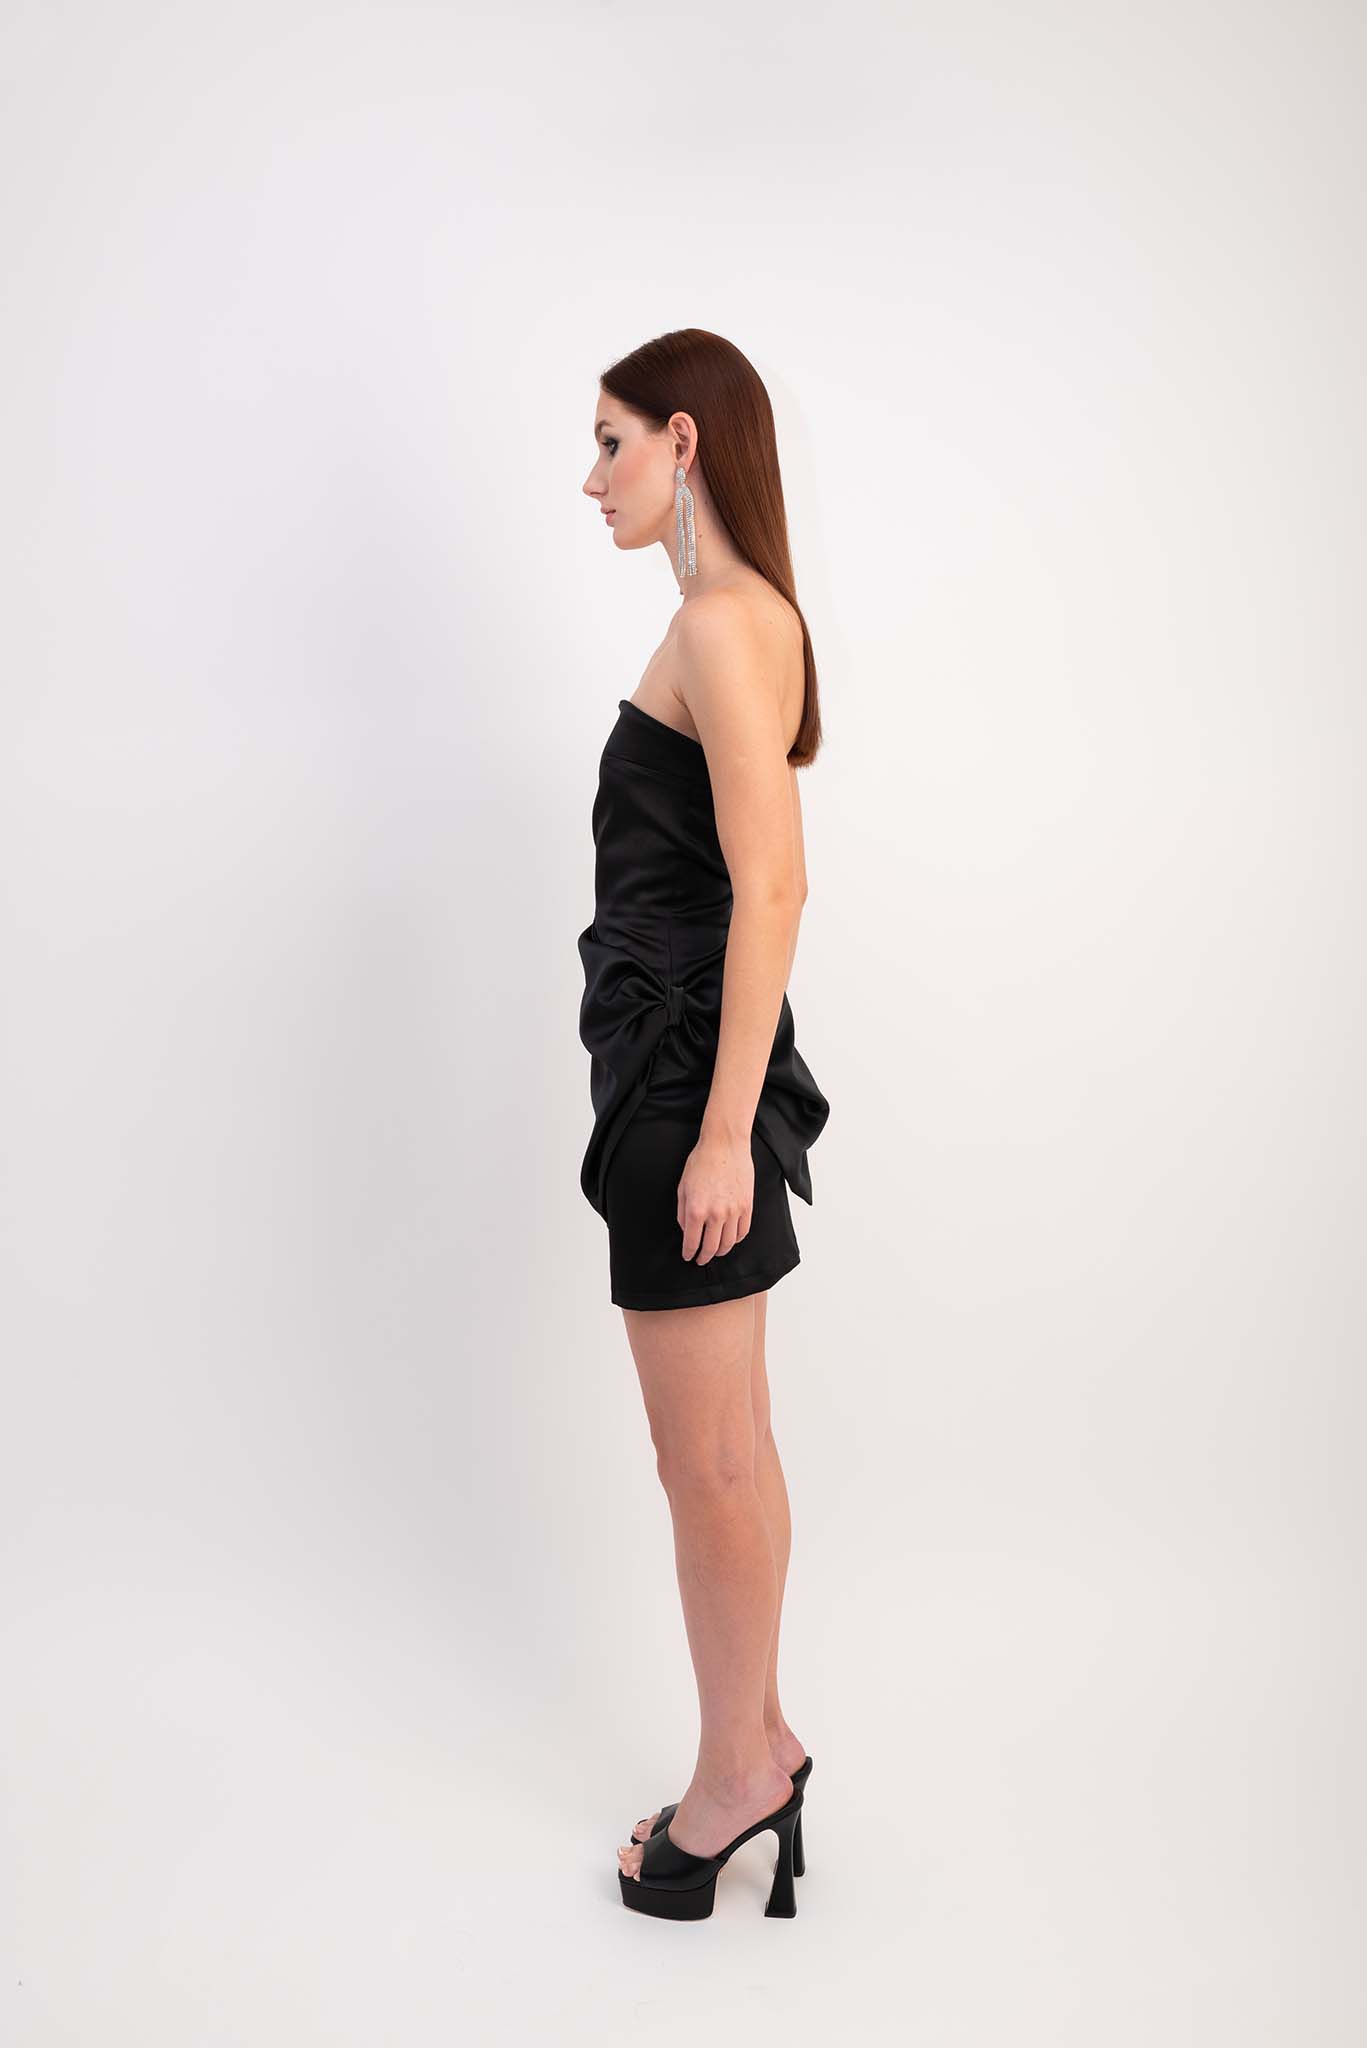 IRA by Irini Charalampous, @irathebrand online shop fashionable ready-to-wear womenswear brand satin dress LOLITA color black high heels Cyprus Greece